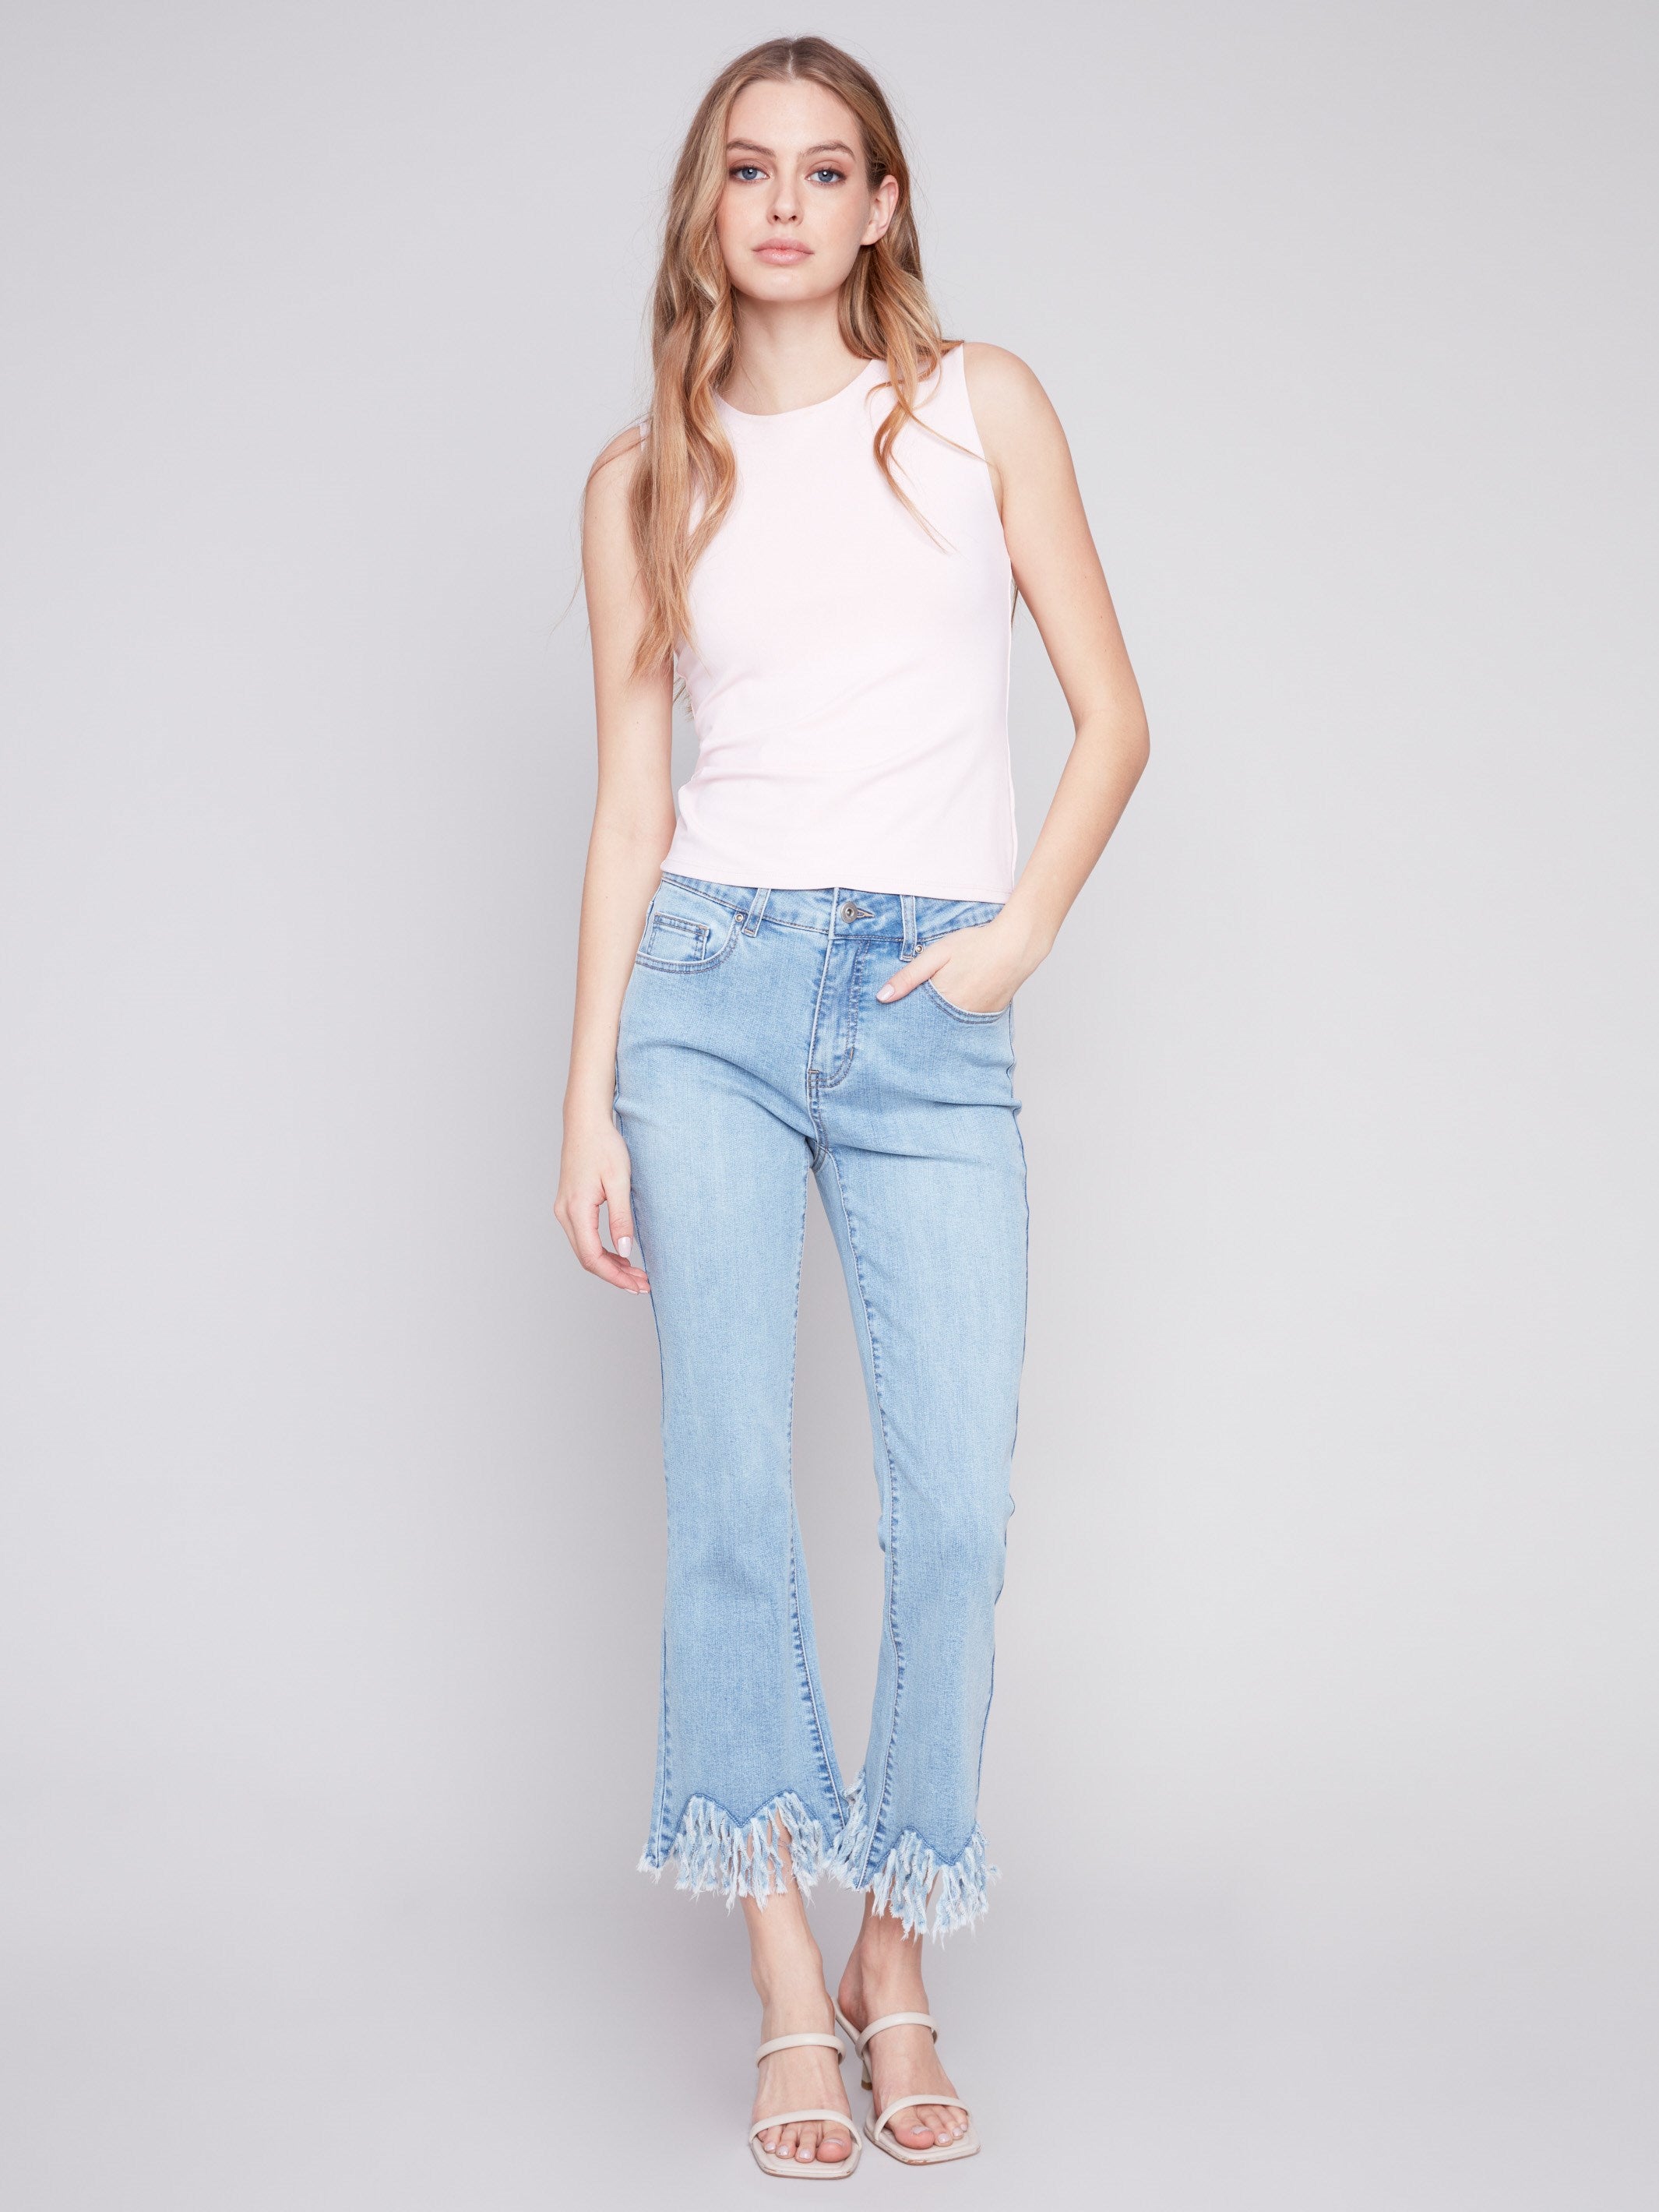 Charlie B Cropped Jeans with Fringed Hem - Light Blue - Image 1